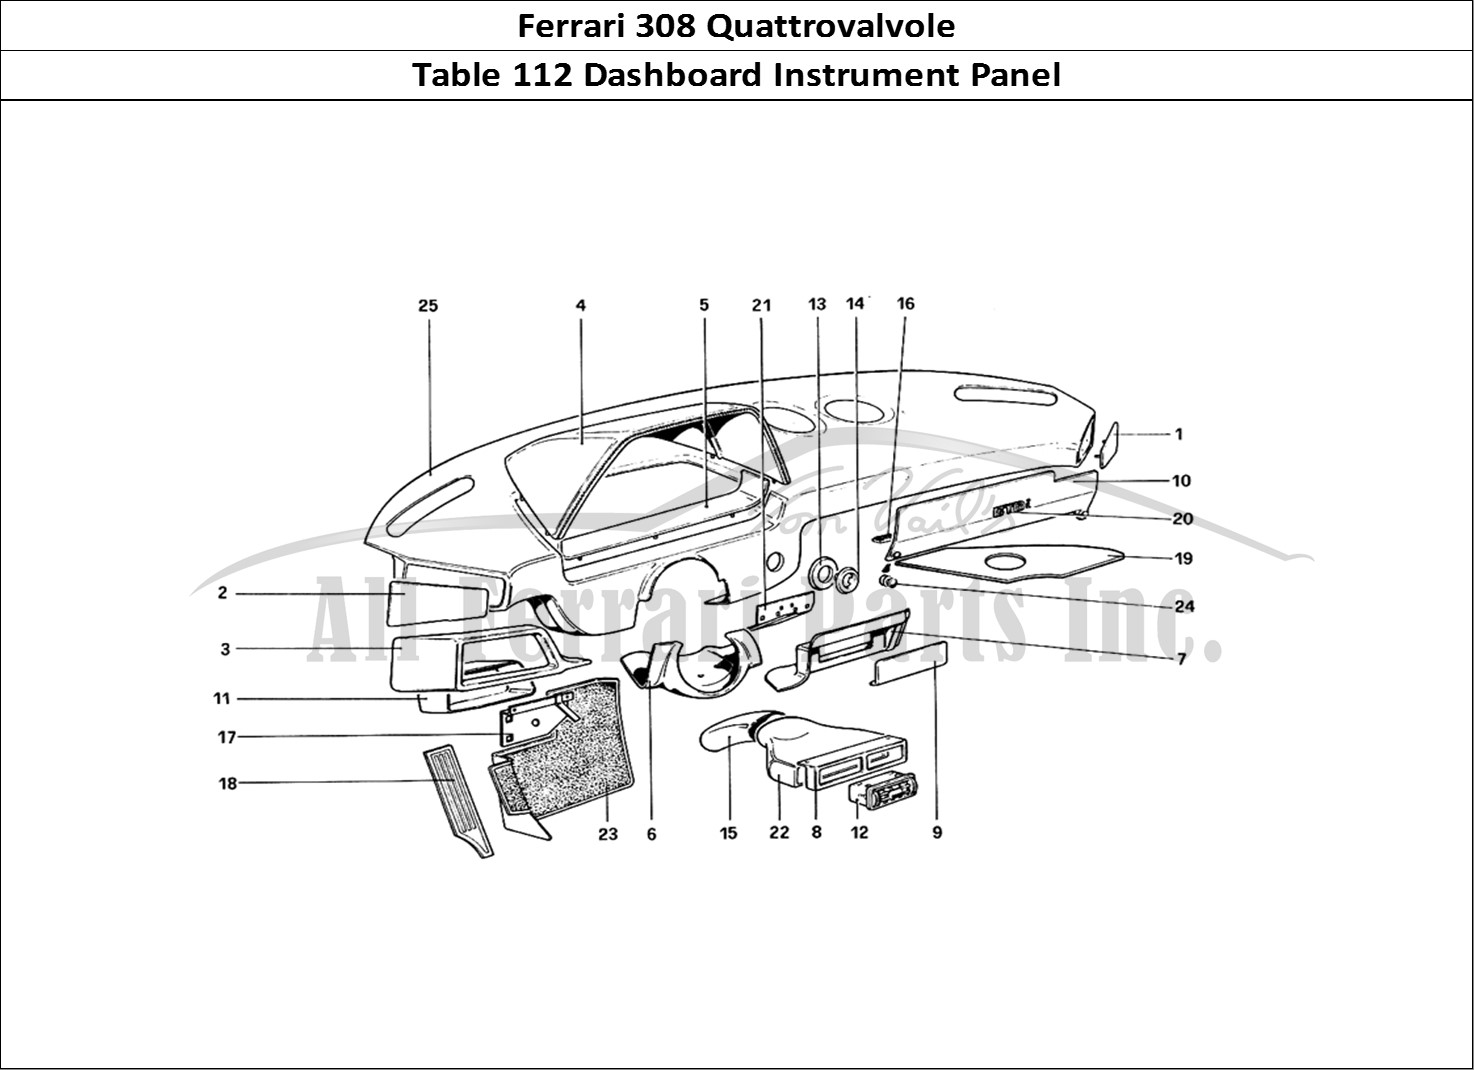 Ferrari Parts Ferrari 308 Quattrovalvole (1985) Page 112 Instrument Panel